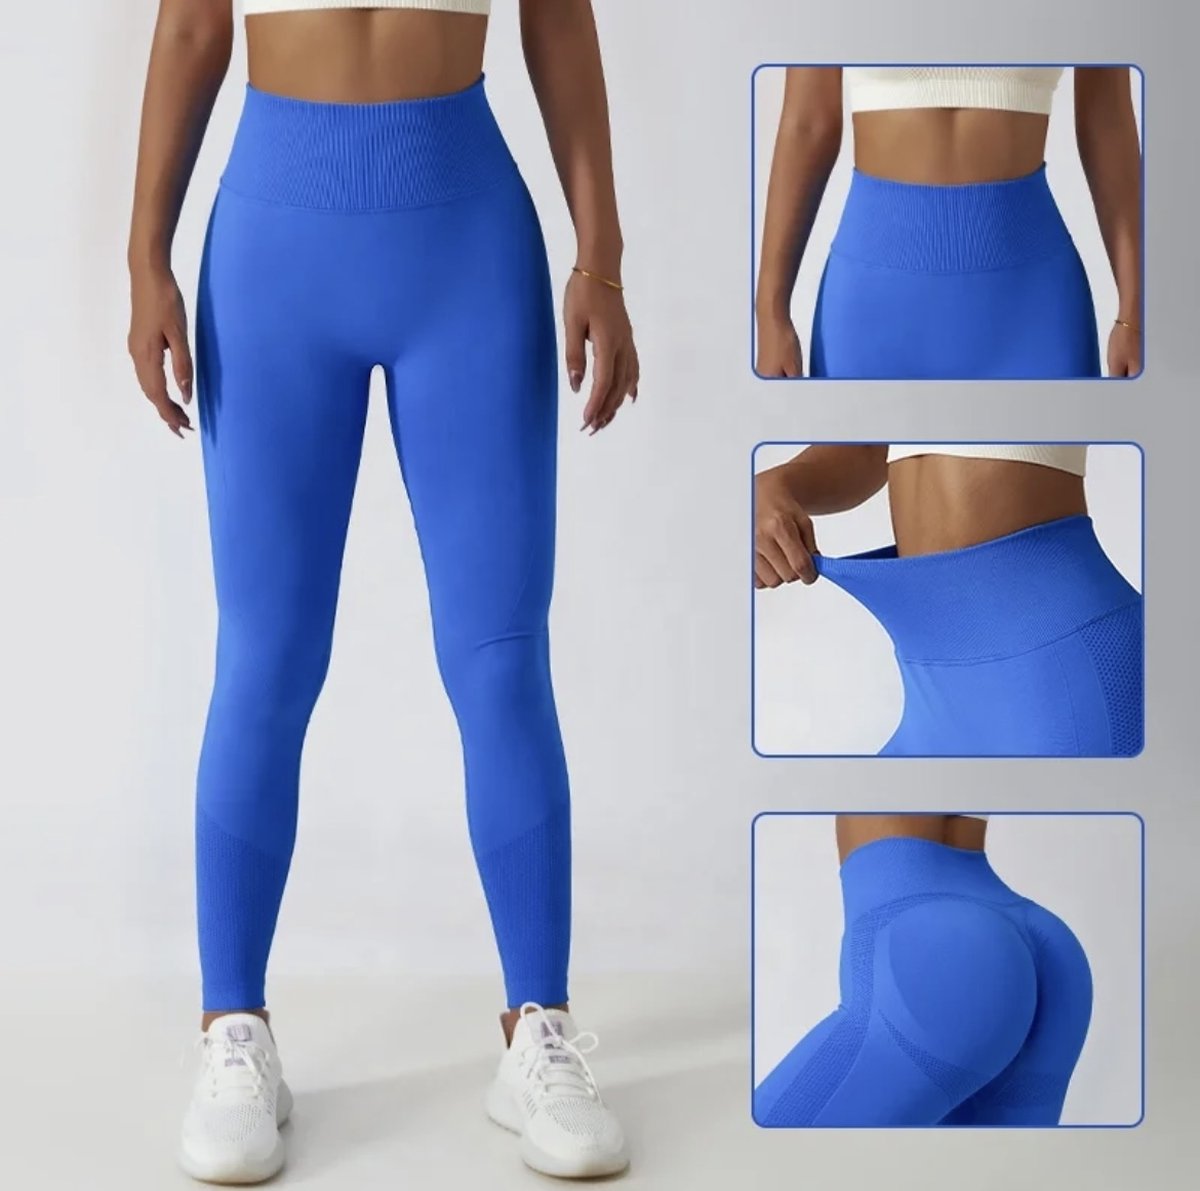 SPRING GYM LEGGING - Maat L - Blauw - Koningsblauw - Fitness legging - Sportlegging - Sportkleding - Yogalegging - Hardlooplegging